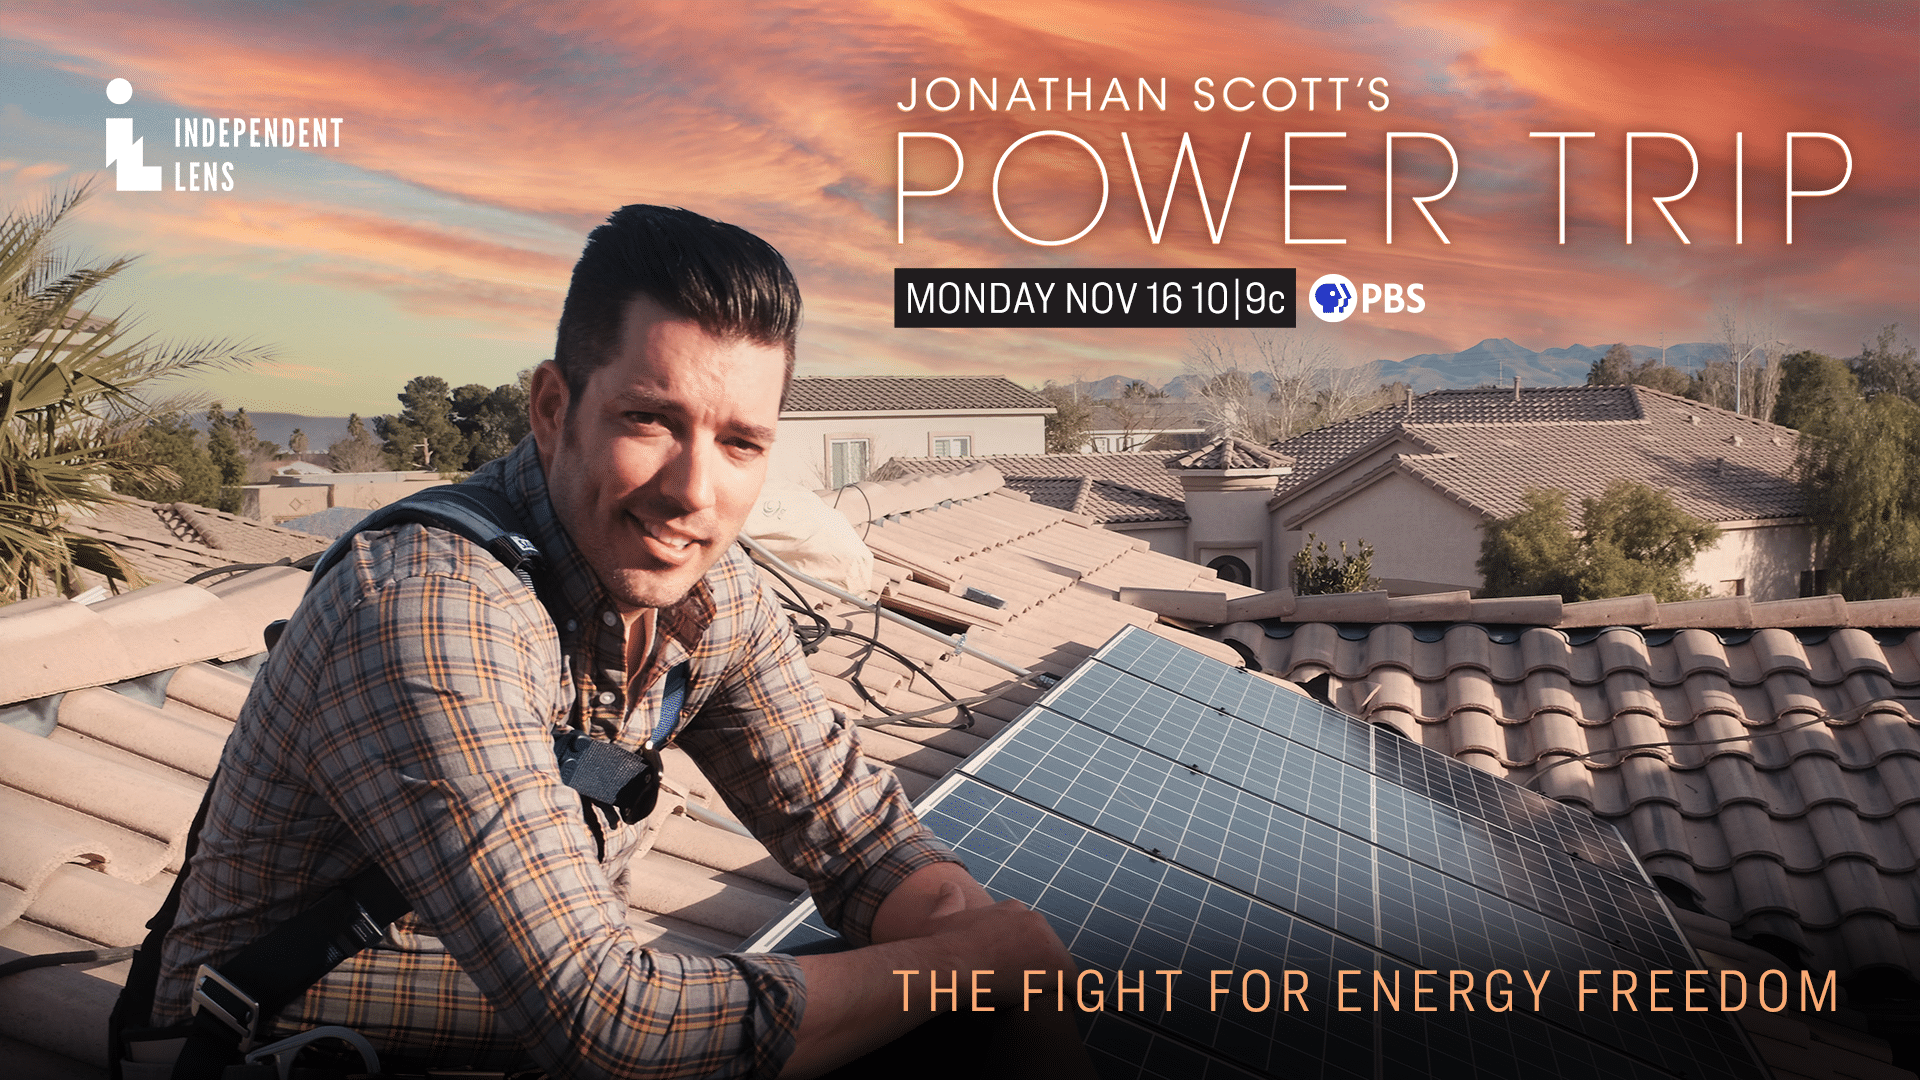 Jonathan Scott solar film Power Trip poster